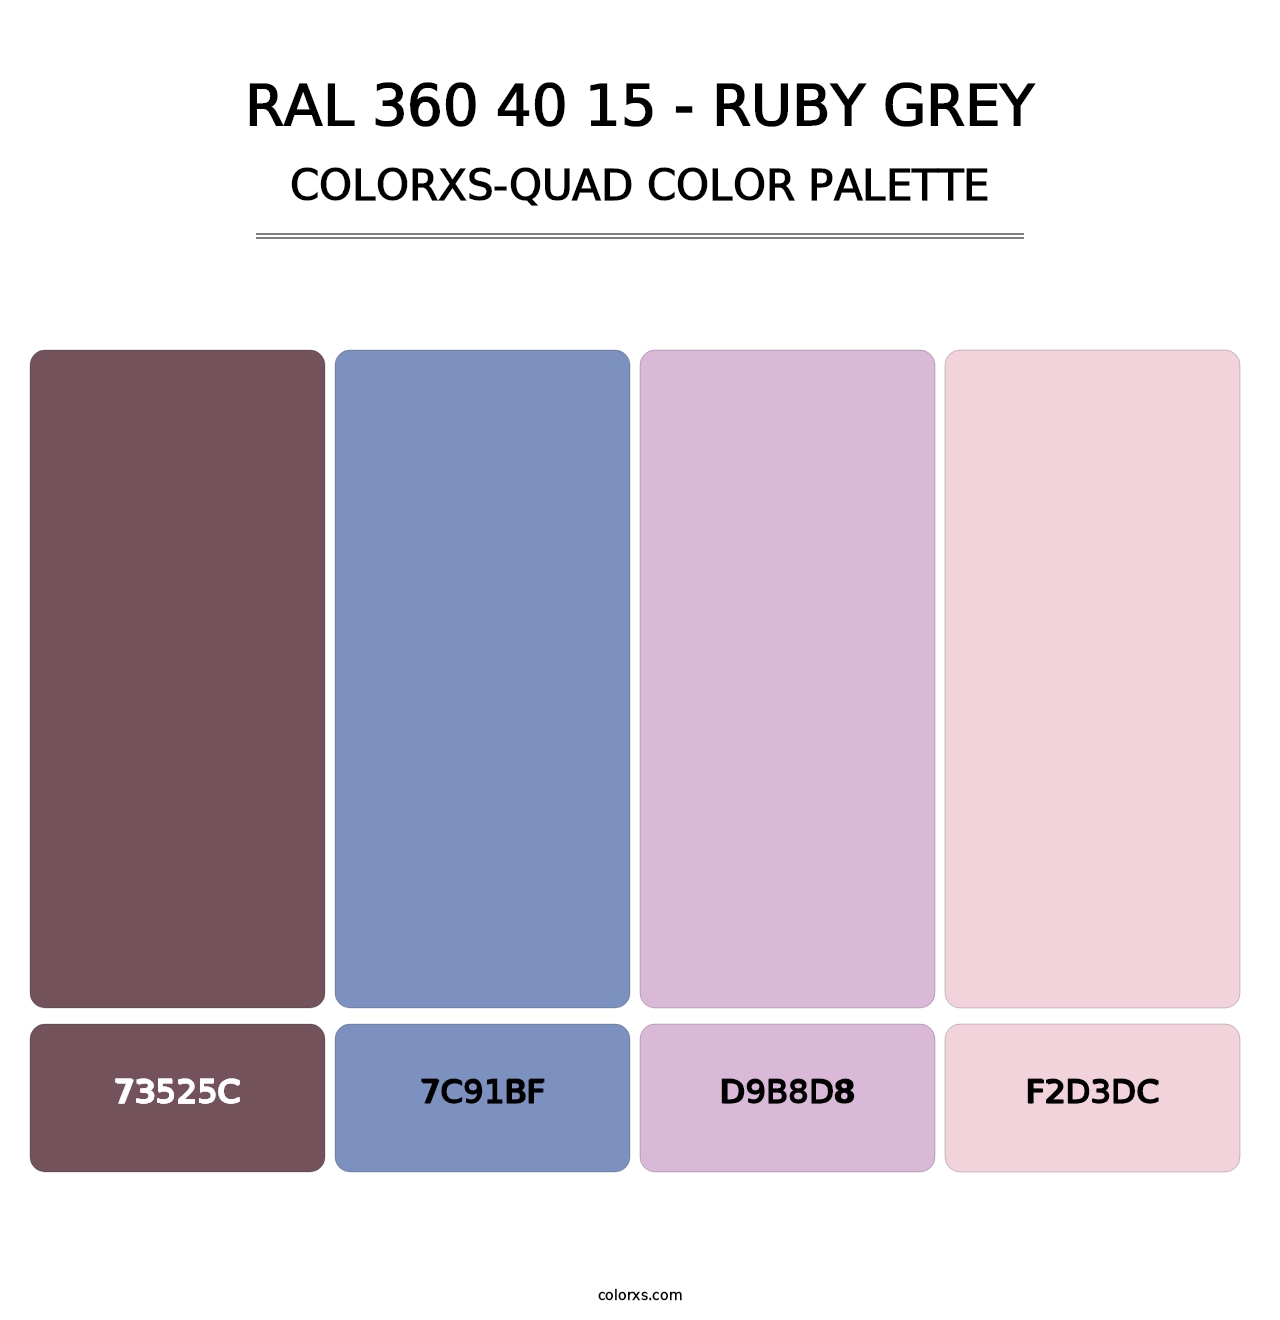 RAL 360 40 15 - Ruby Grey - Colorxs Quad Palette